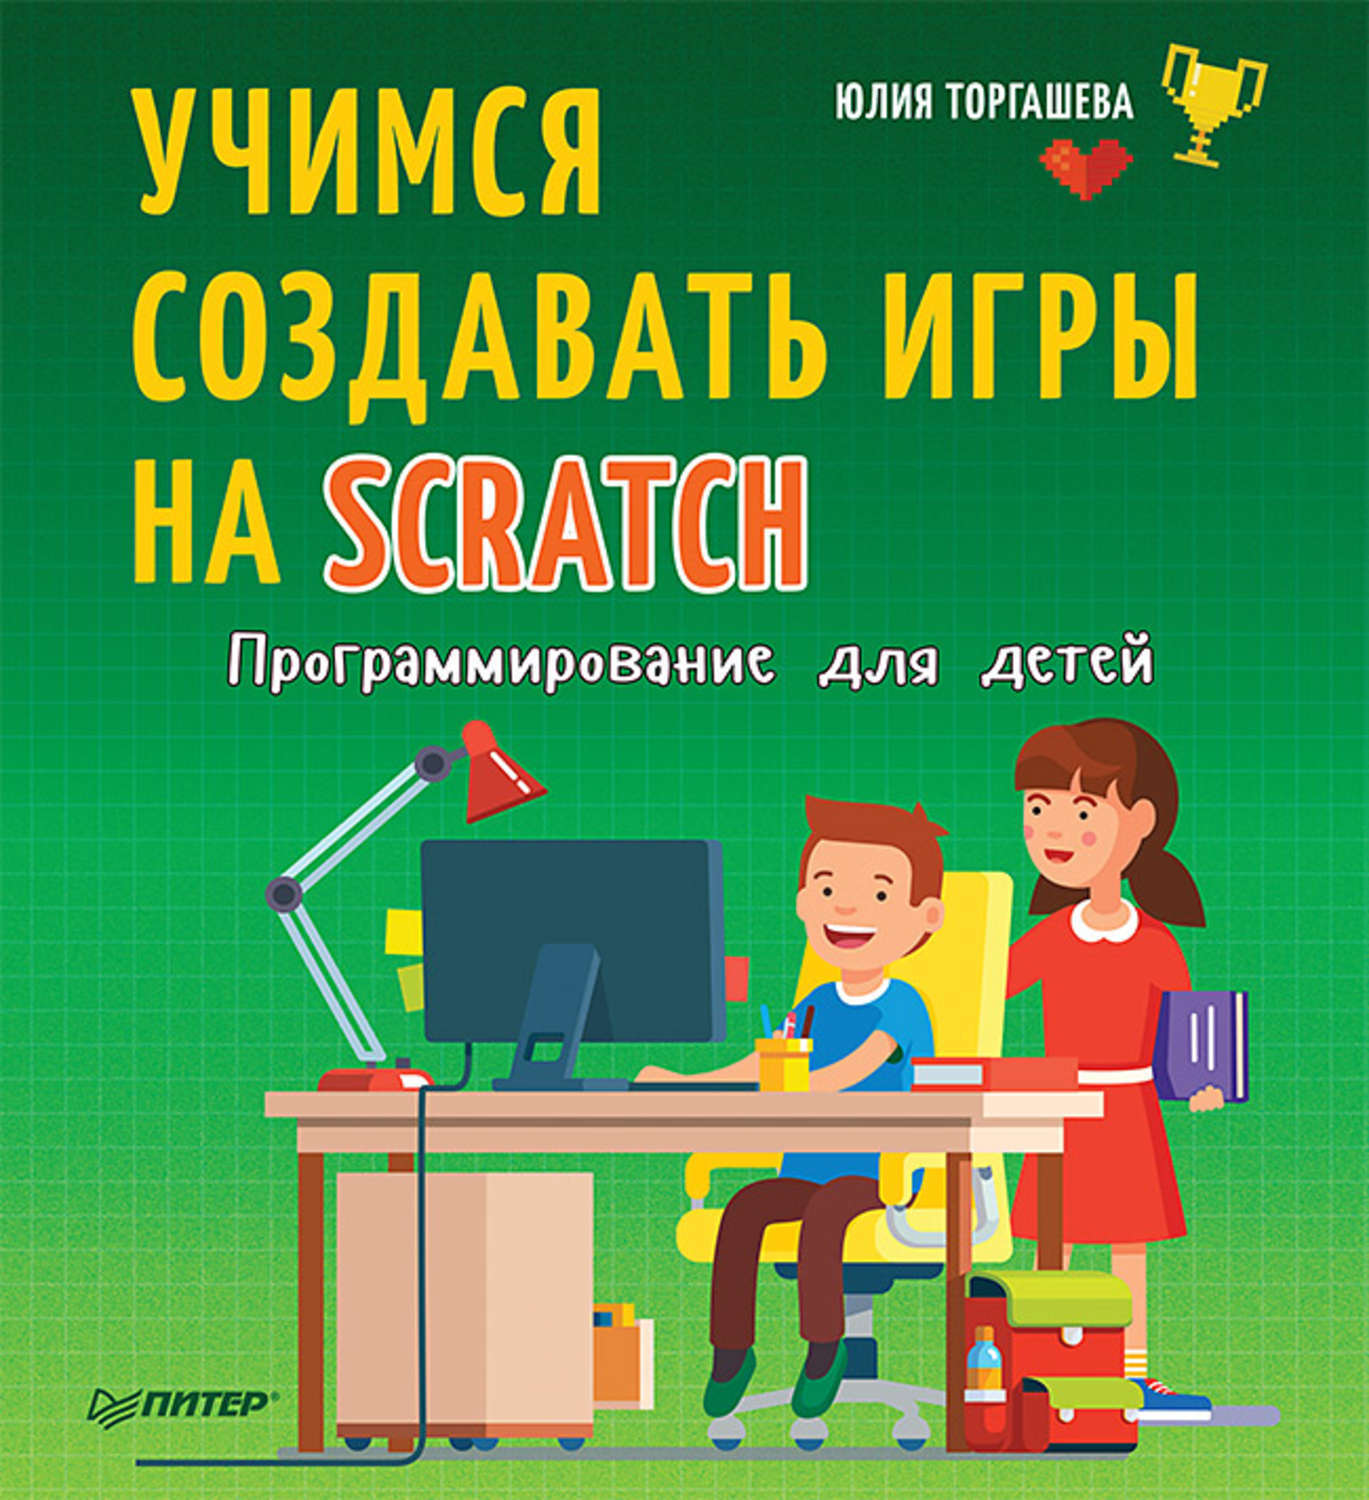 Книги про программирование. Программирование для детей книга. Программирование для де ей. Программирование игр для детей. Scratch программирование для детей книга.